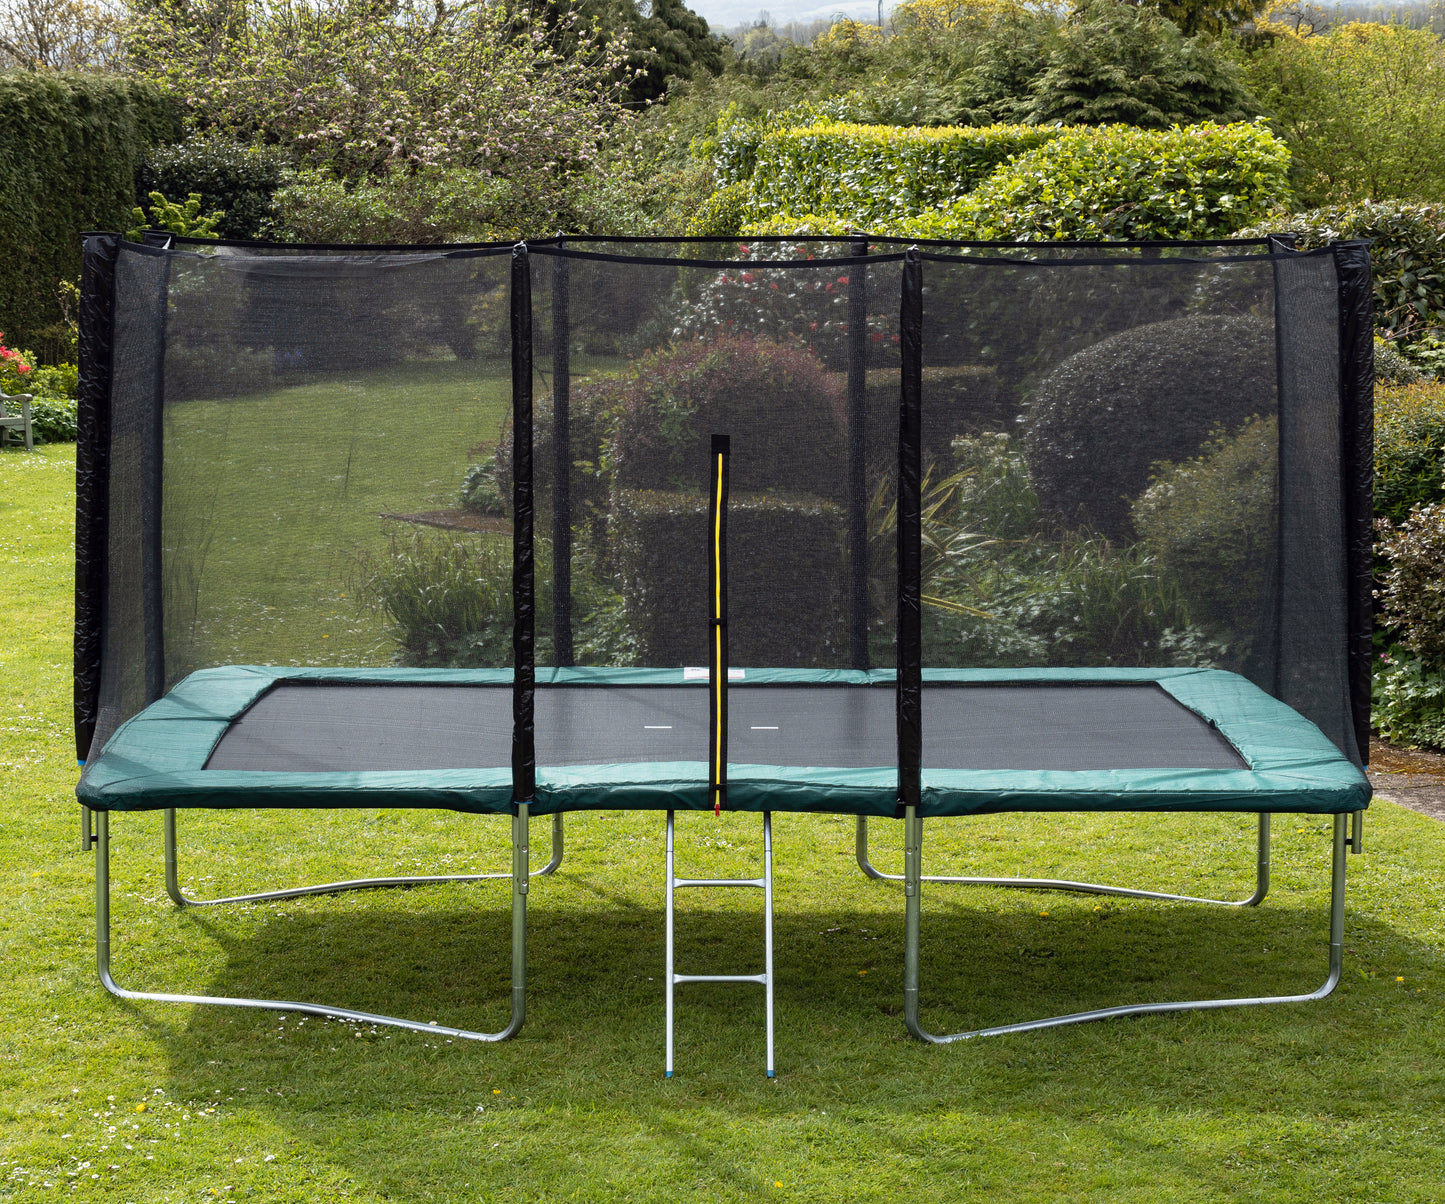 Kanga Green 9x14ft trampoline package